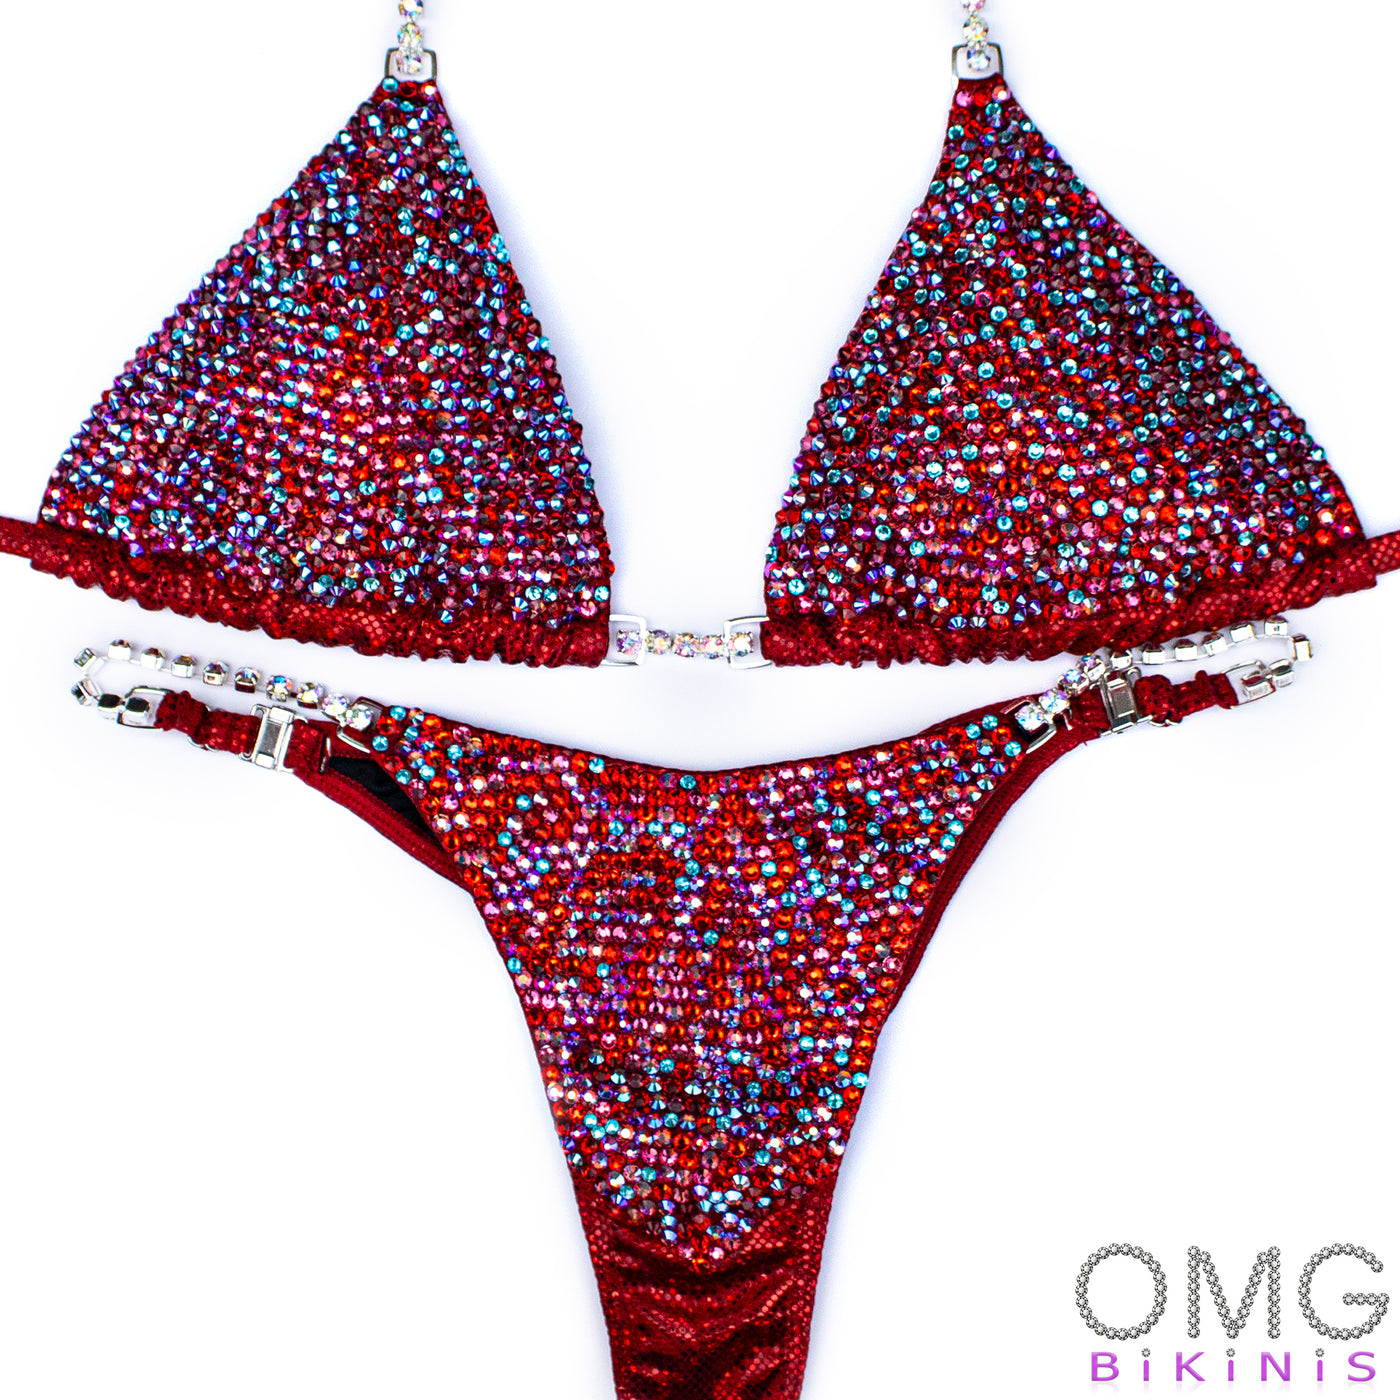 Icy Red Competition Bikini | OMG Bikinis